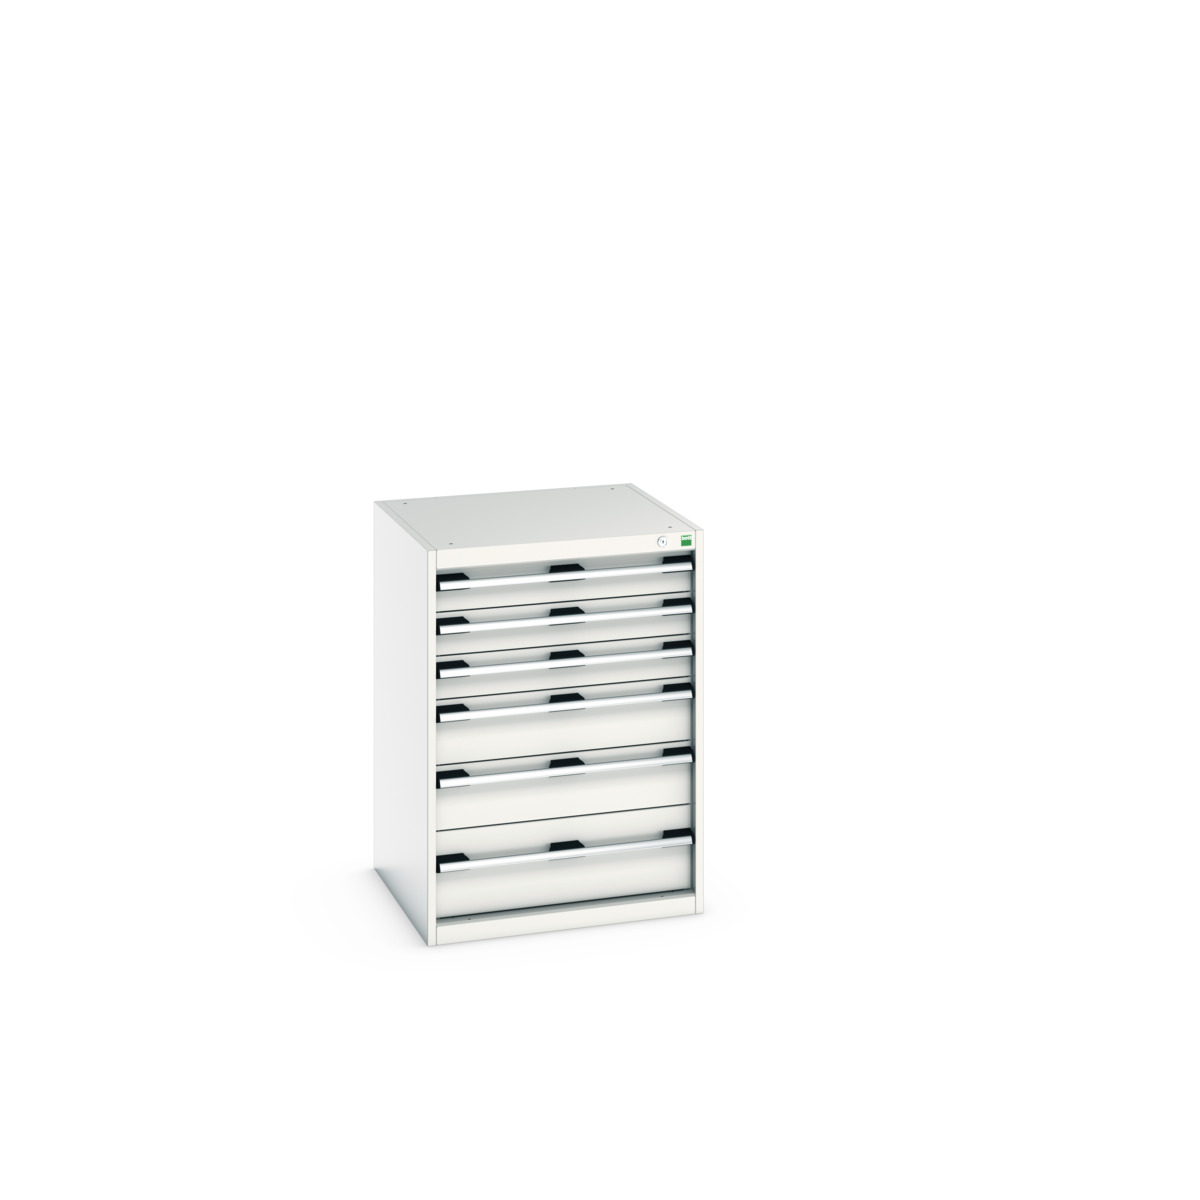 40019049.16V - cubio armoire à tiroirs SL-669-6.3